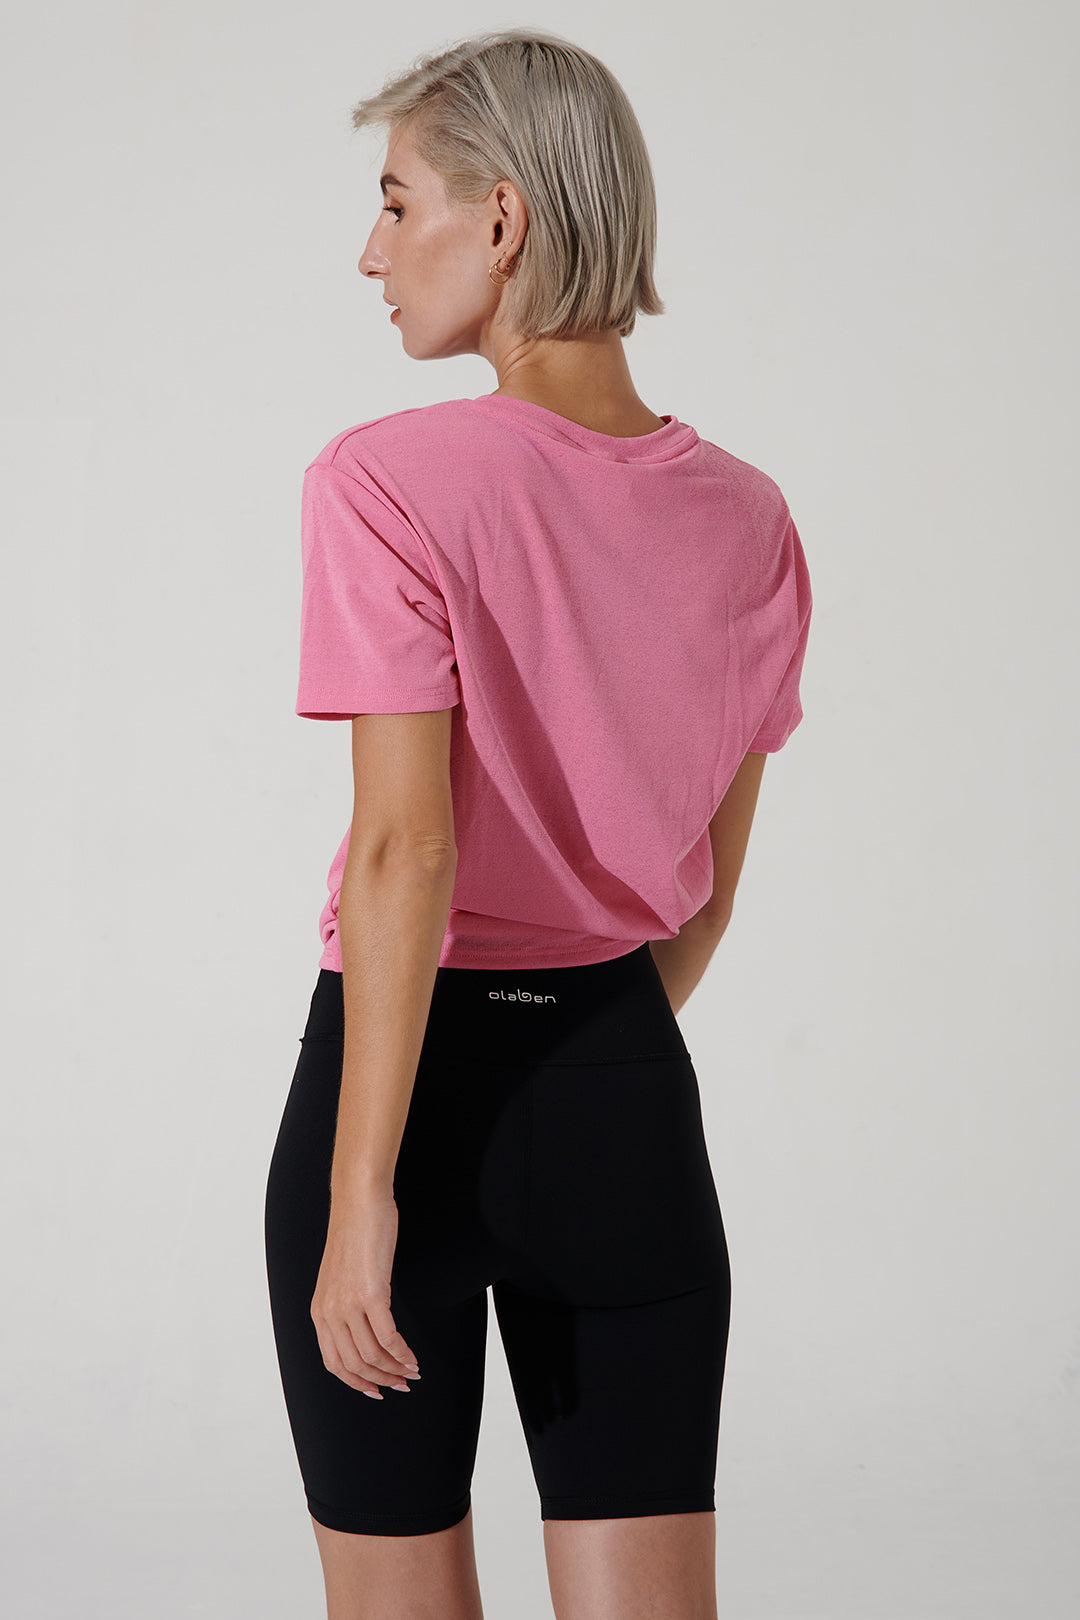 Women's pink short sleeve athletic tee with OLABEN logo - OW-0110-WSS-PK - 2.jpg